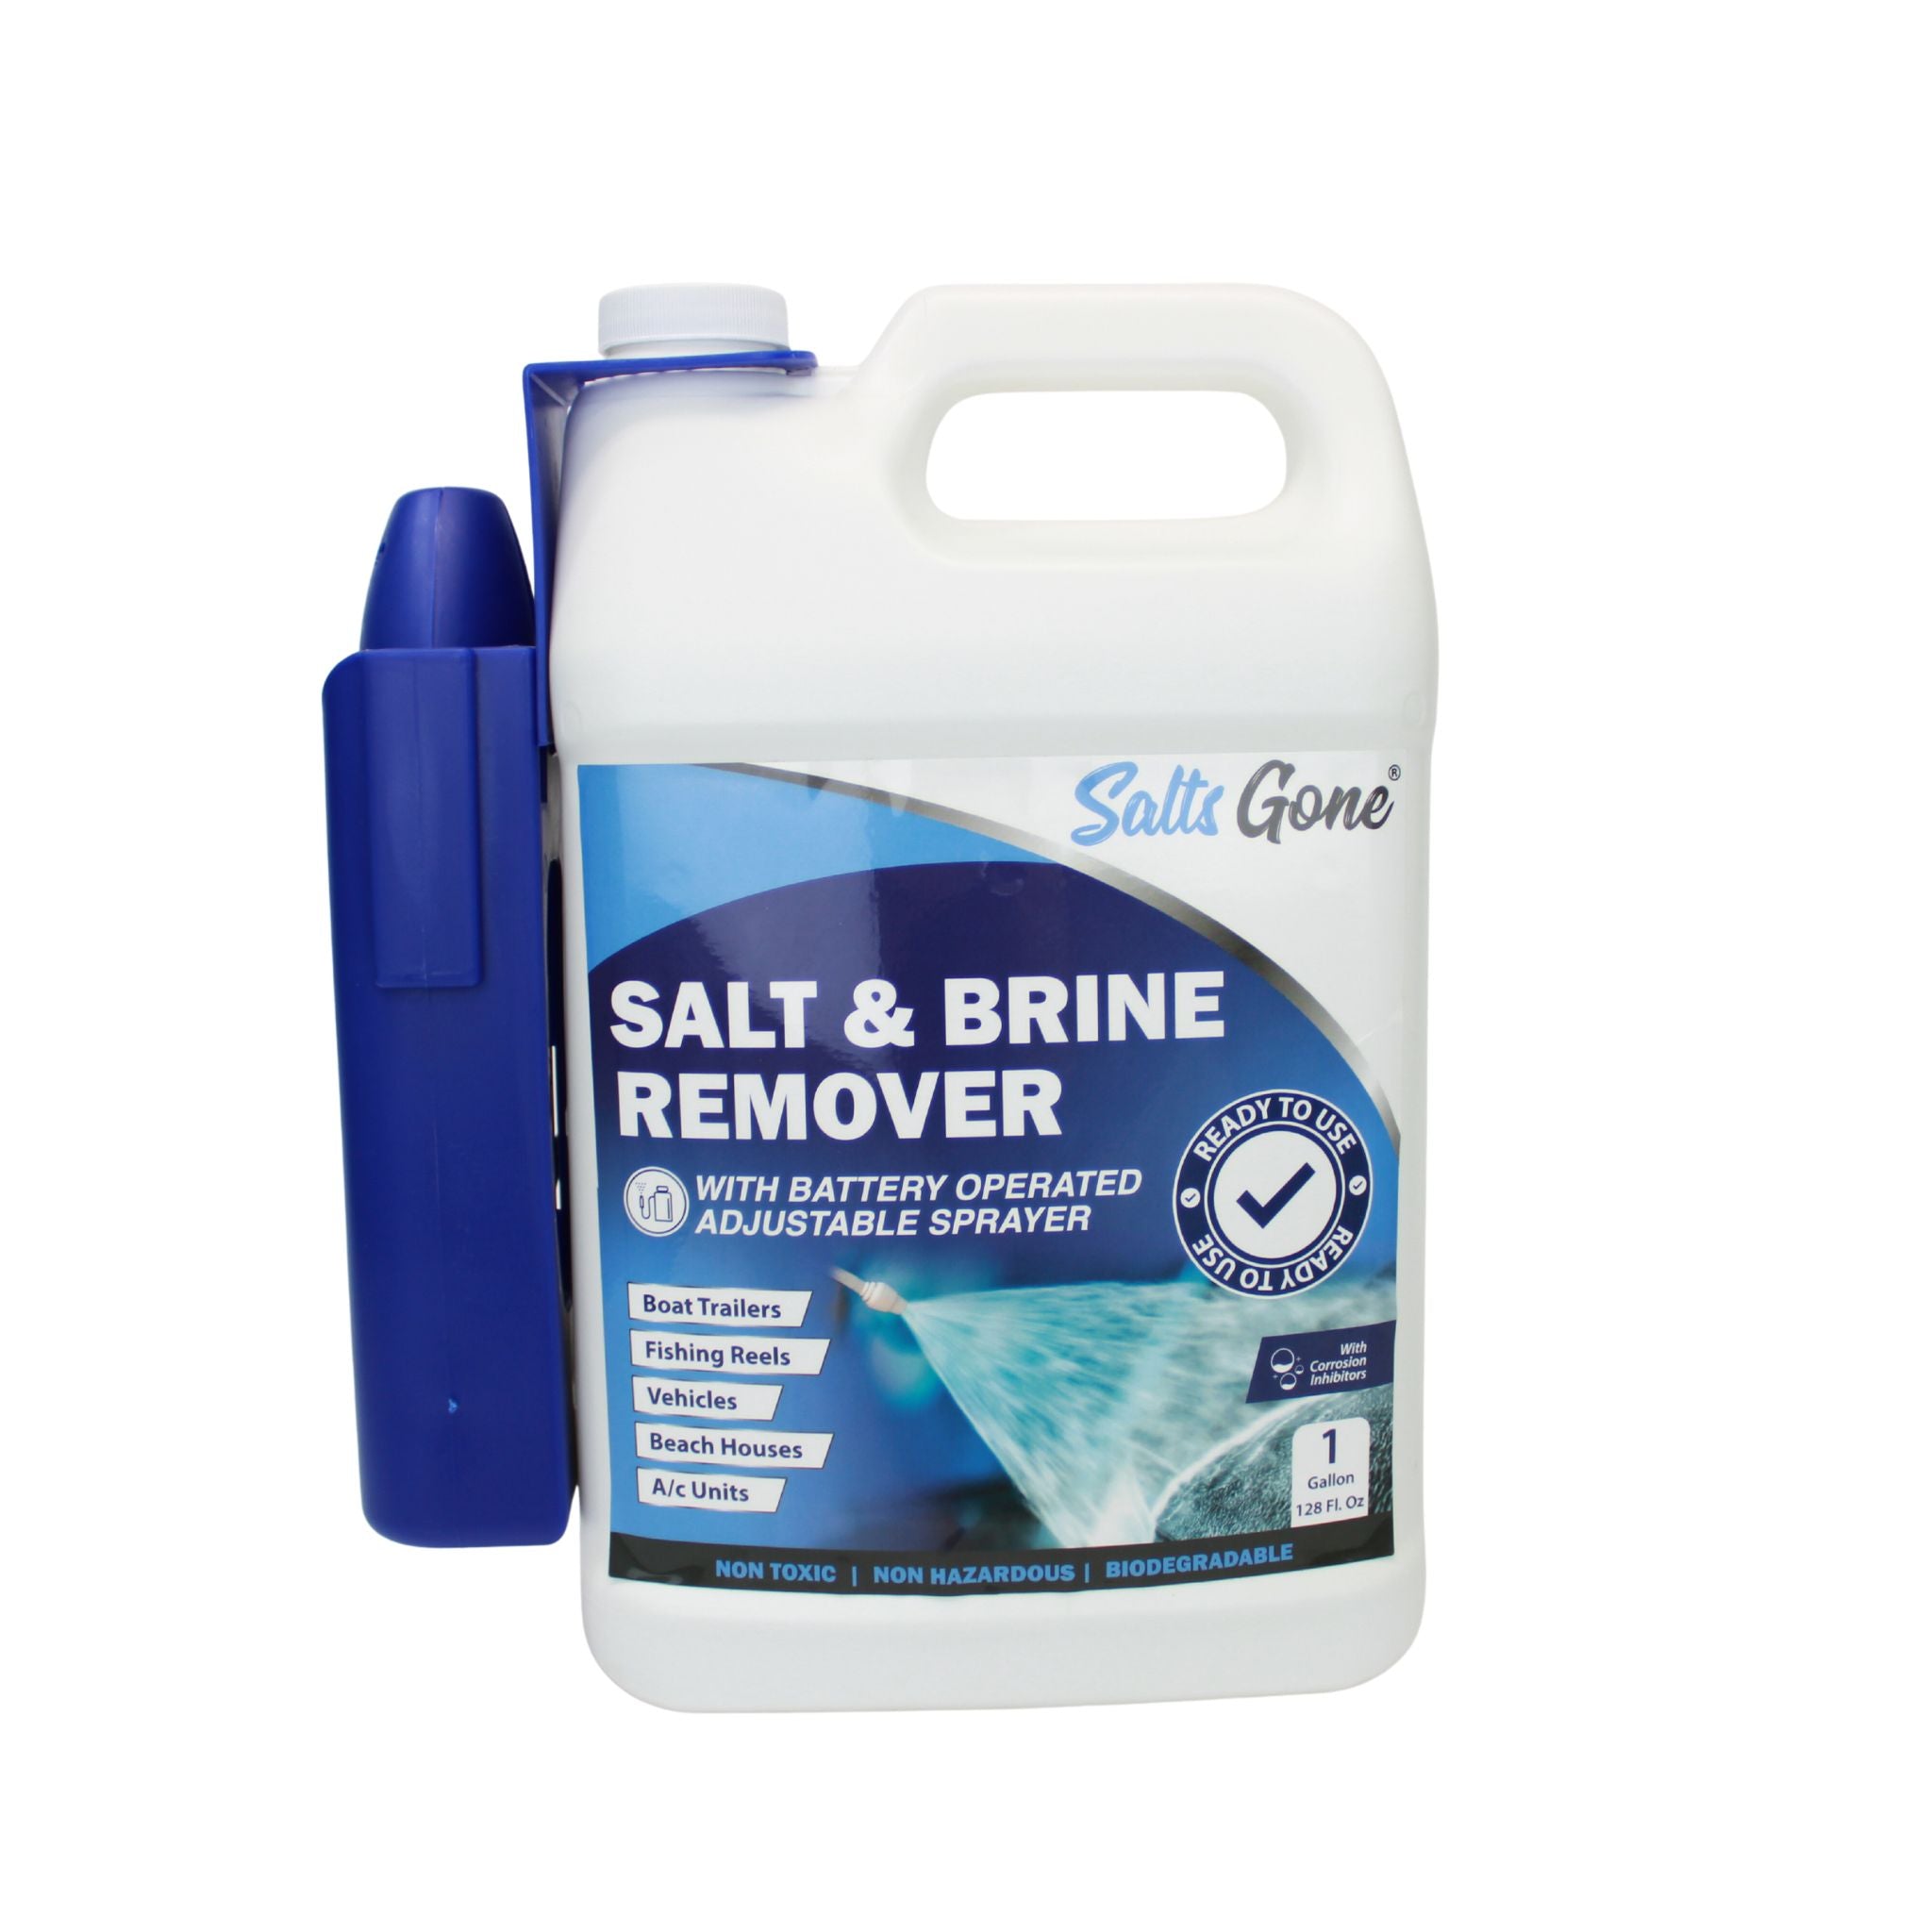 I Must Garden Salt & Brine Remover - Hose End Sprayer